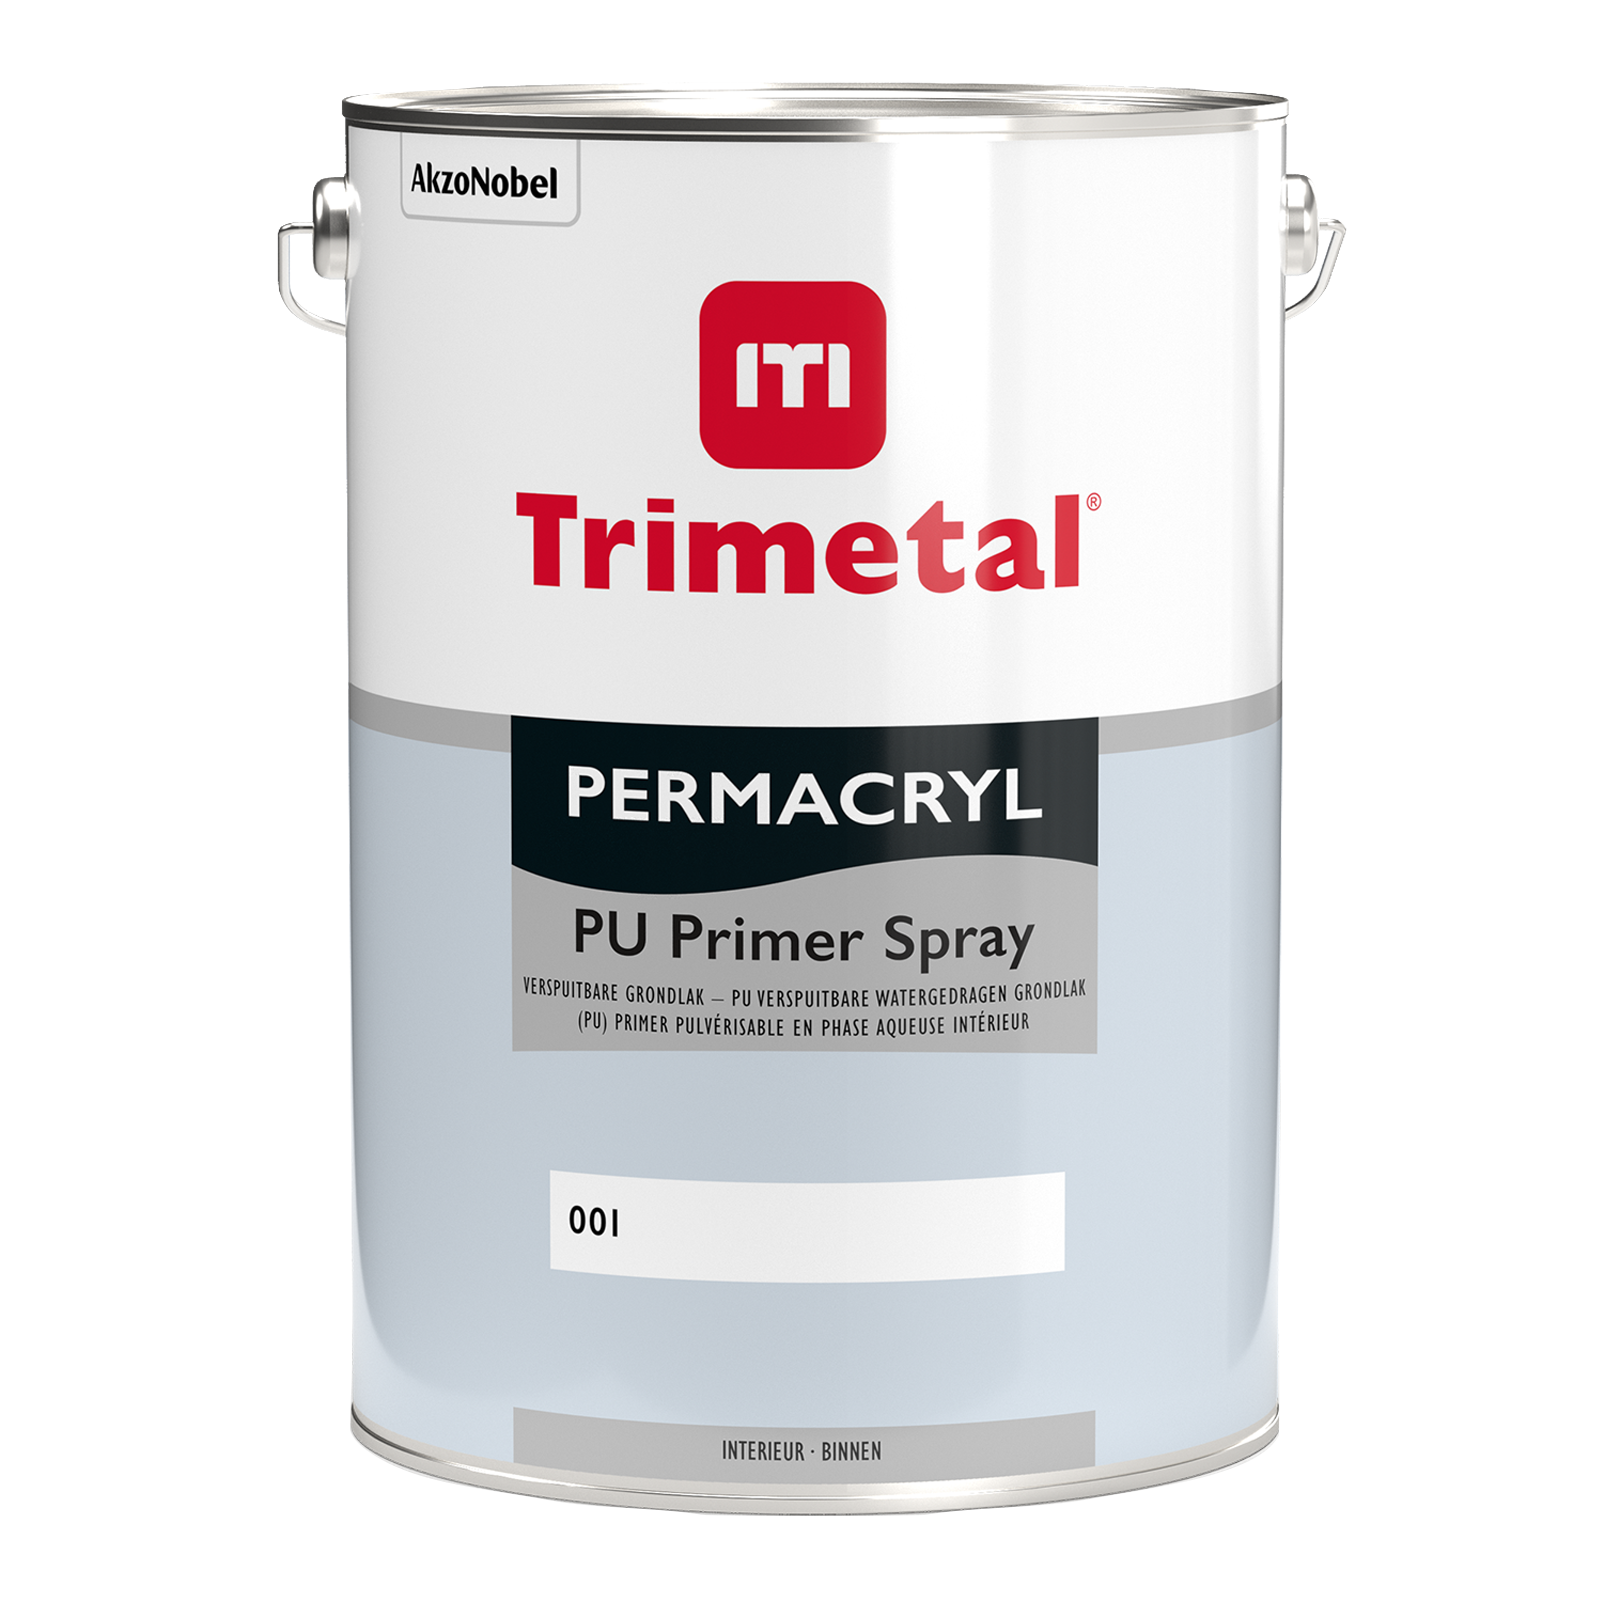 Trimetal Permacryl Pu Primer Spray 5 Liter